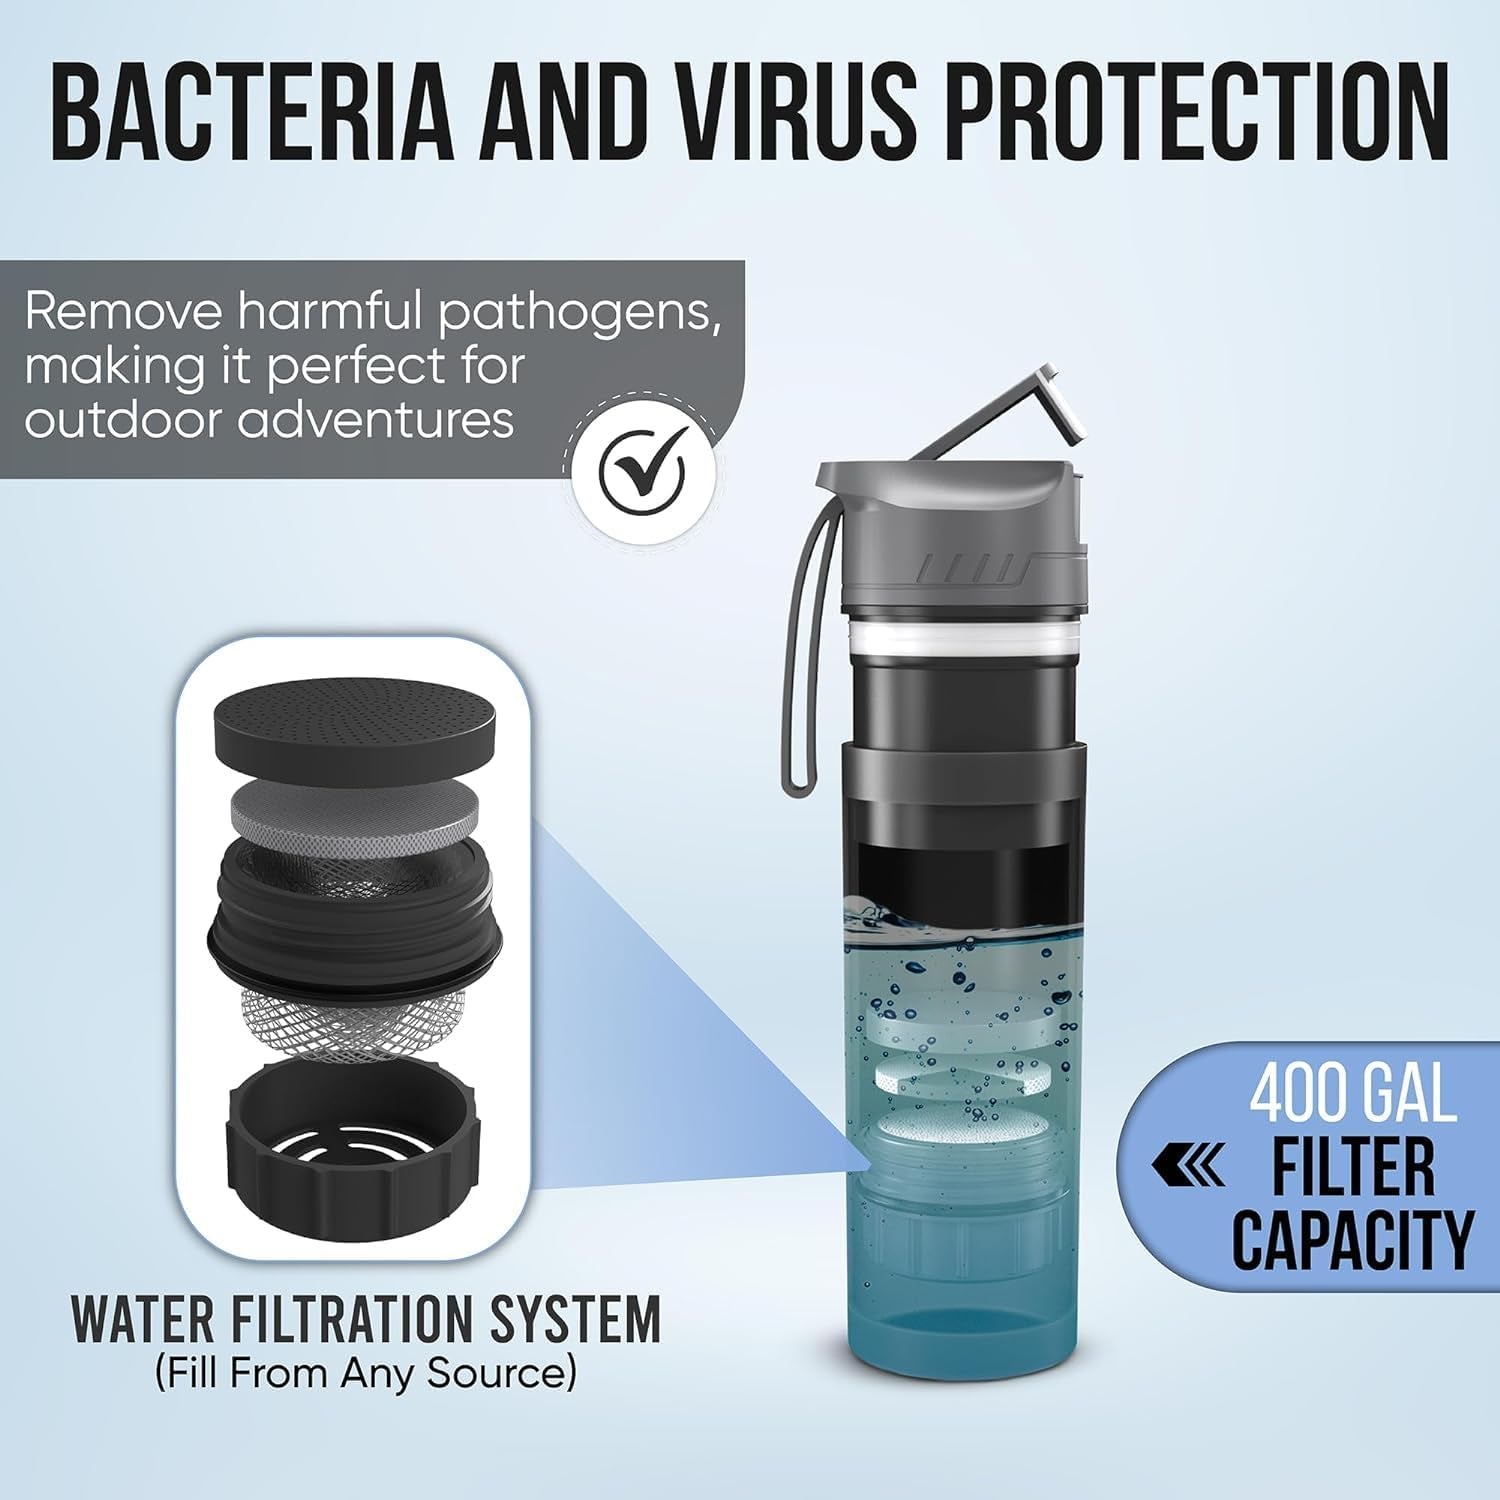 Instant Water Filter & Purifier Water Bottle 22 Oz